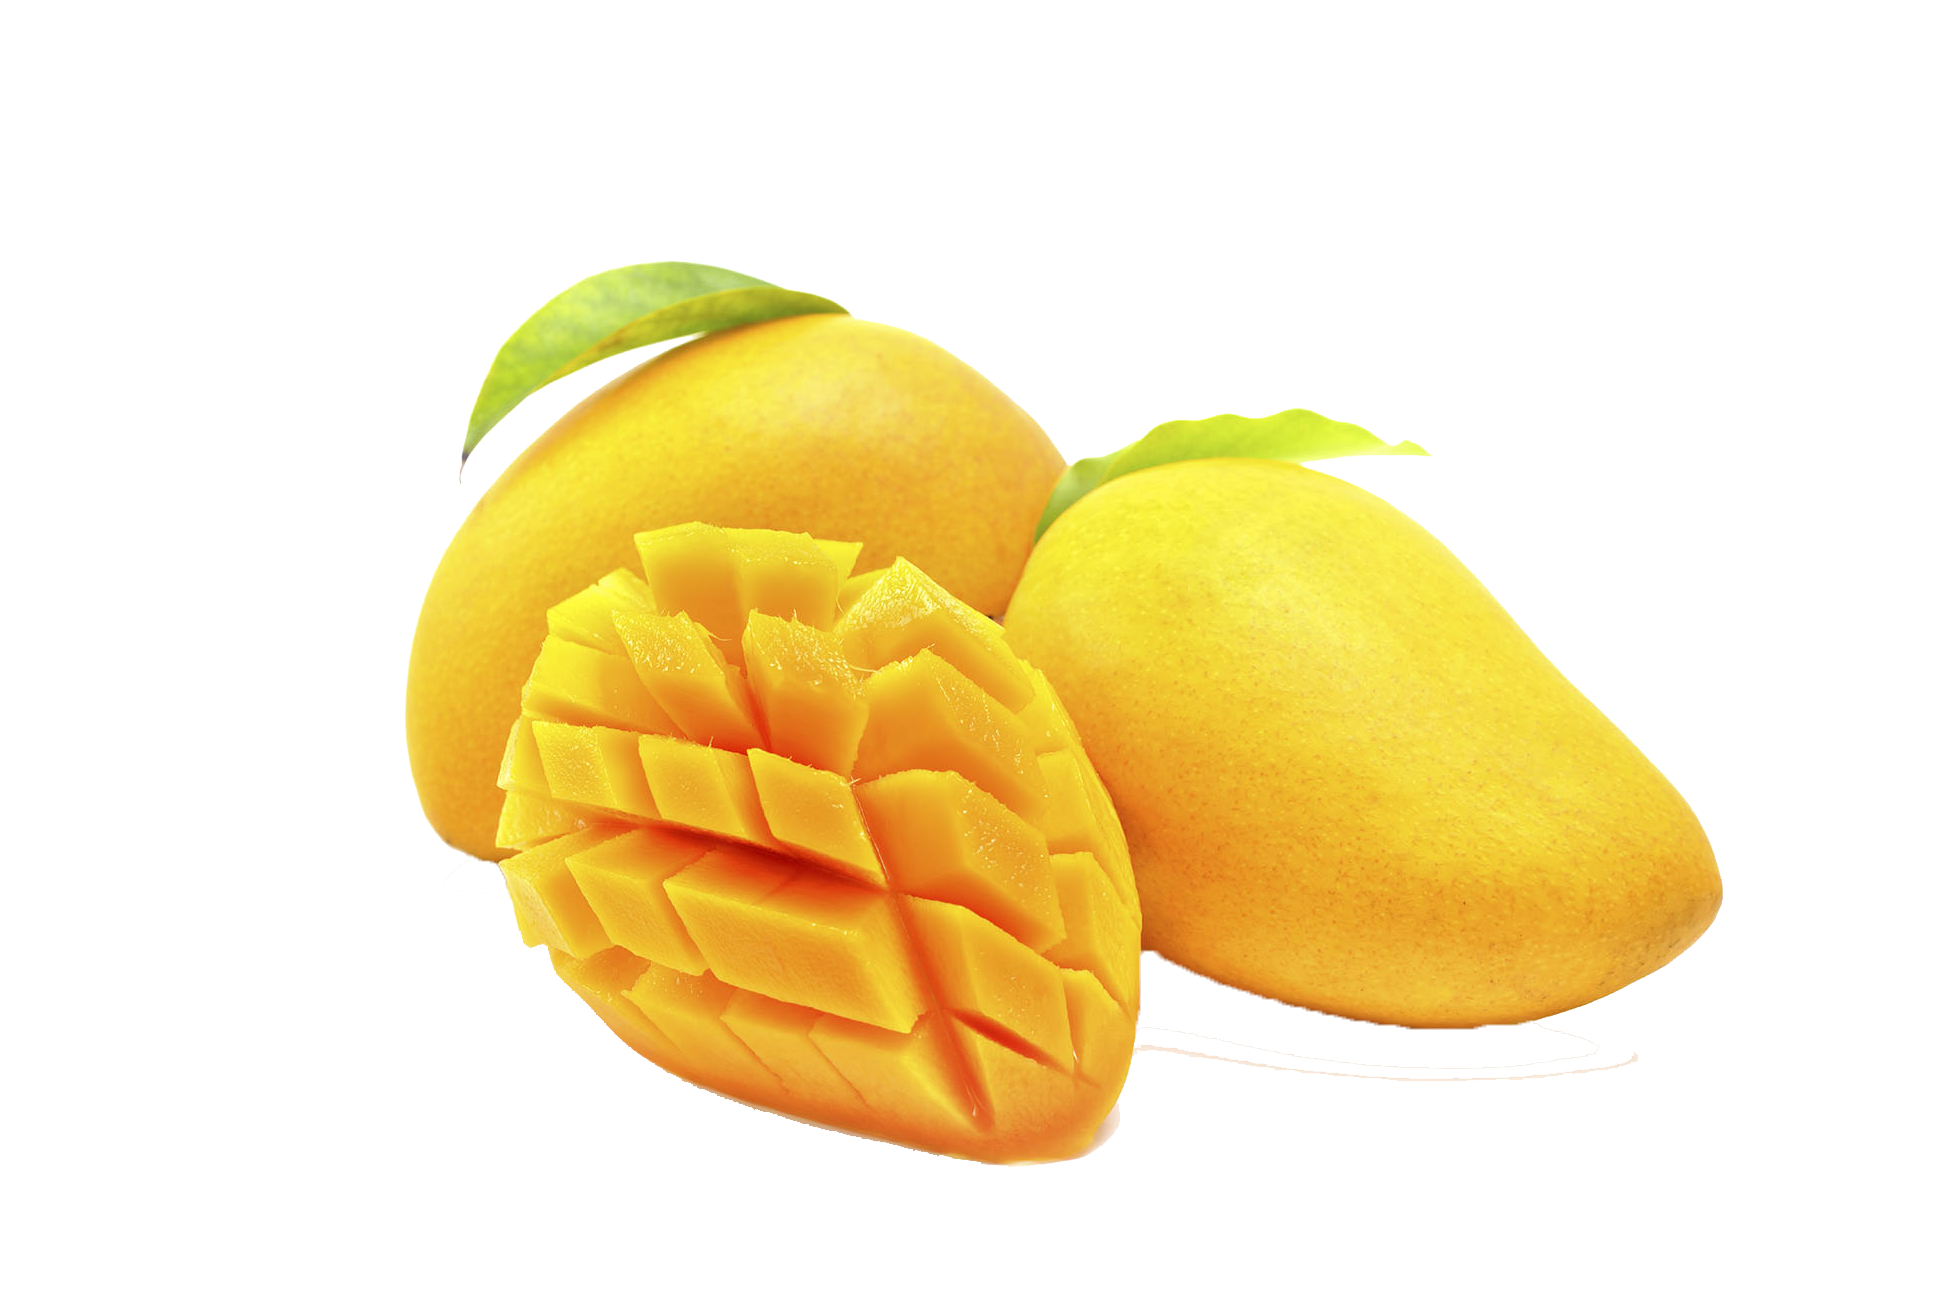 Mango PNG Image in Transparent - Mango Png